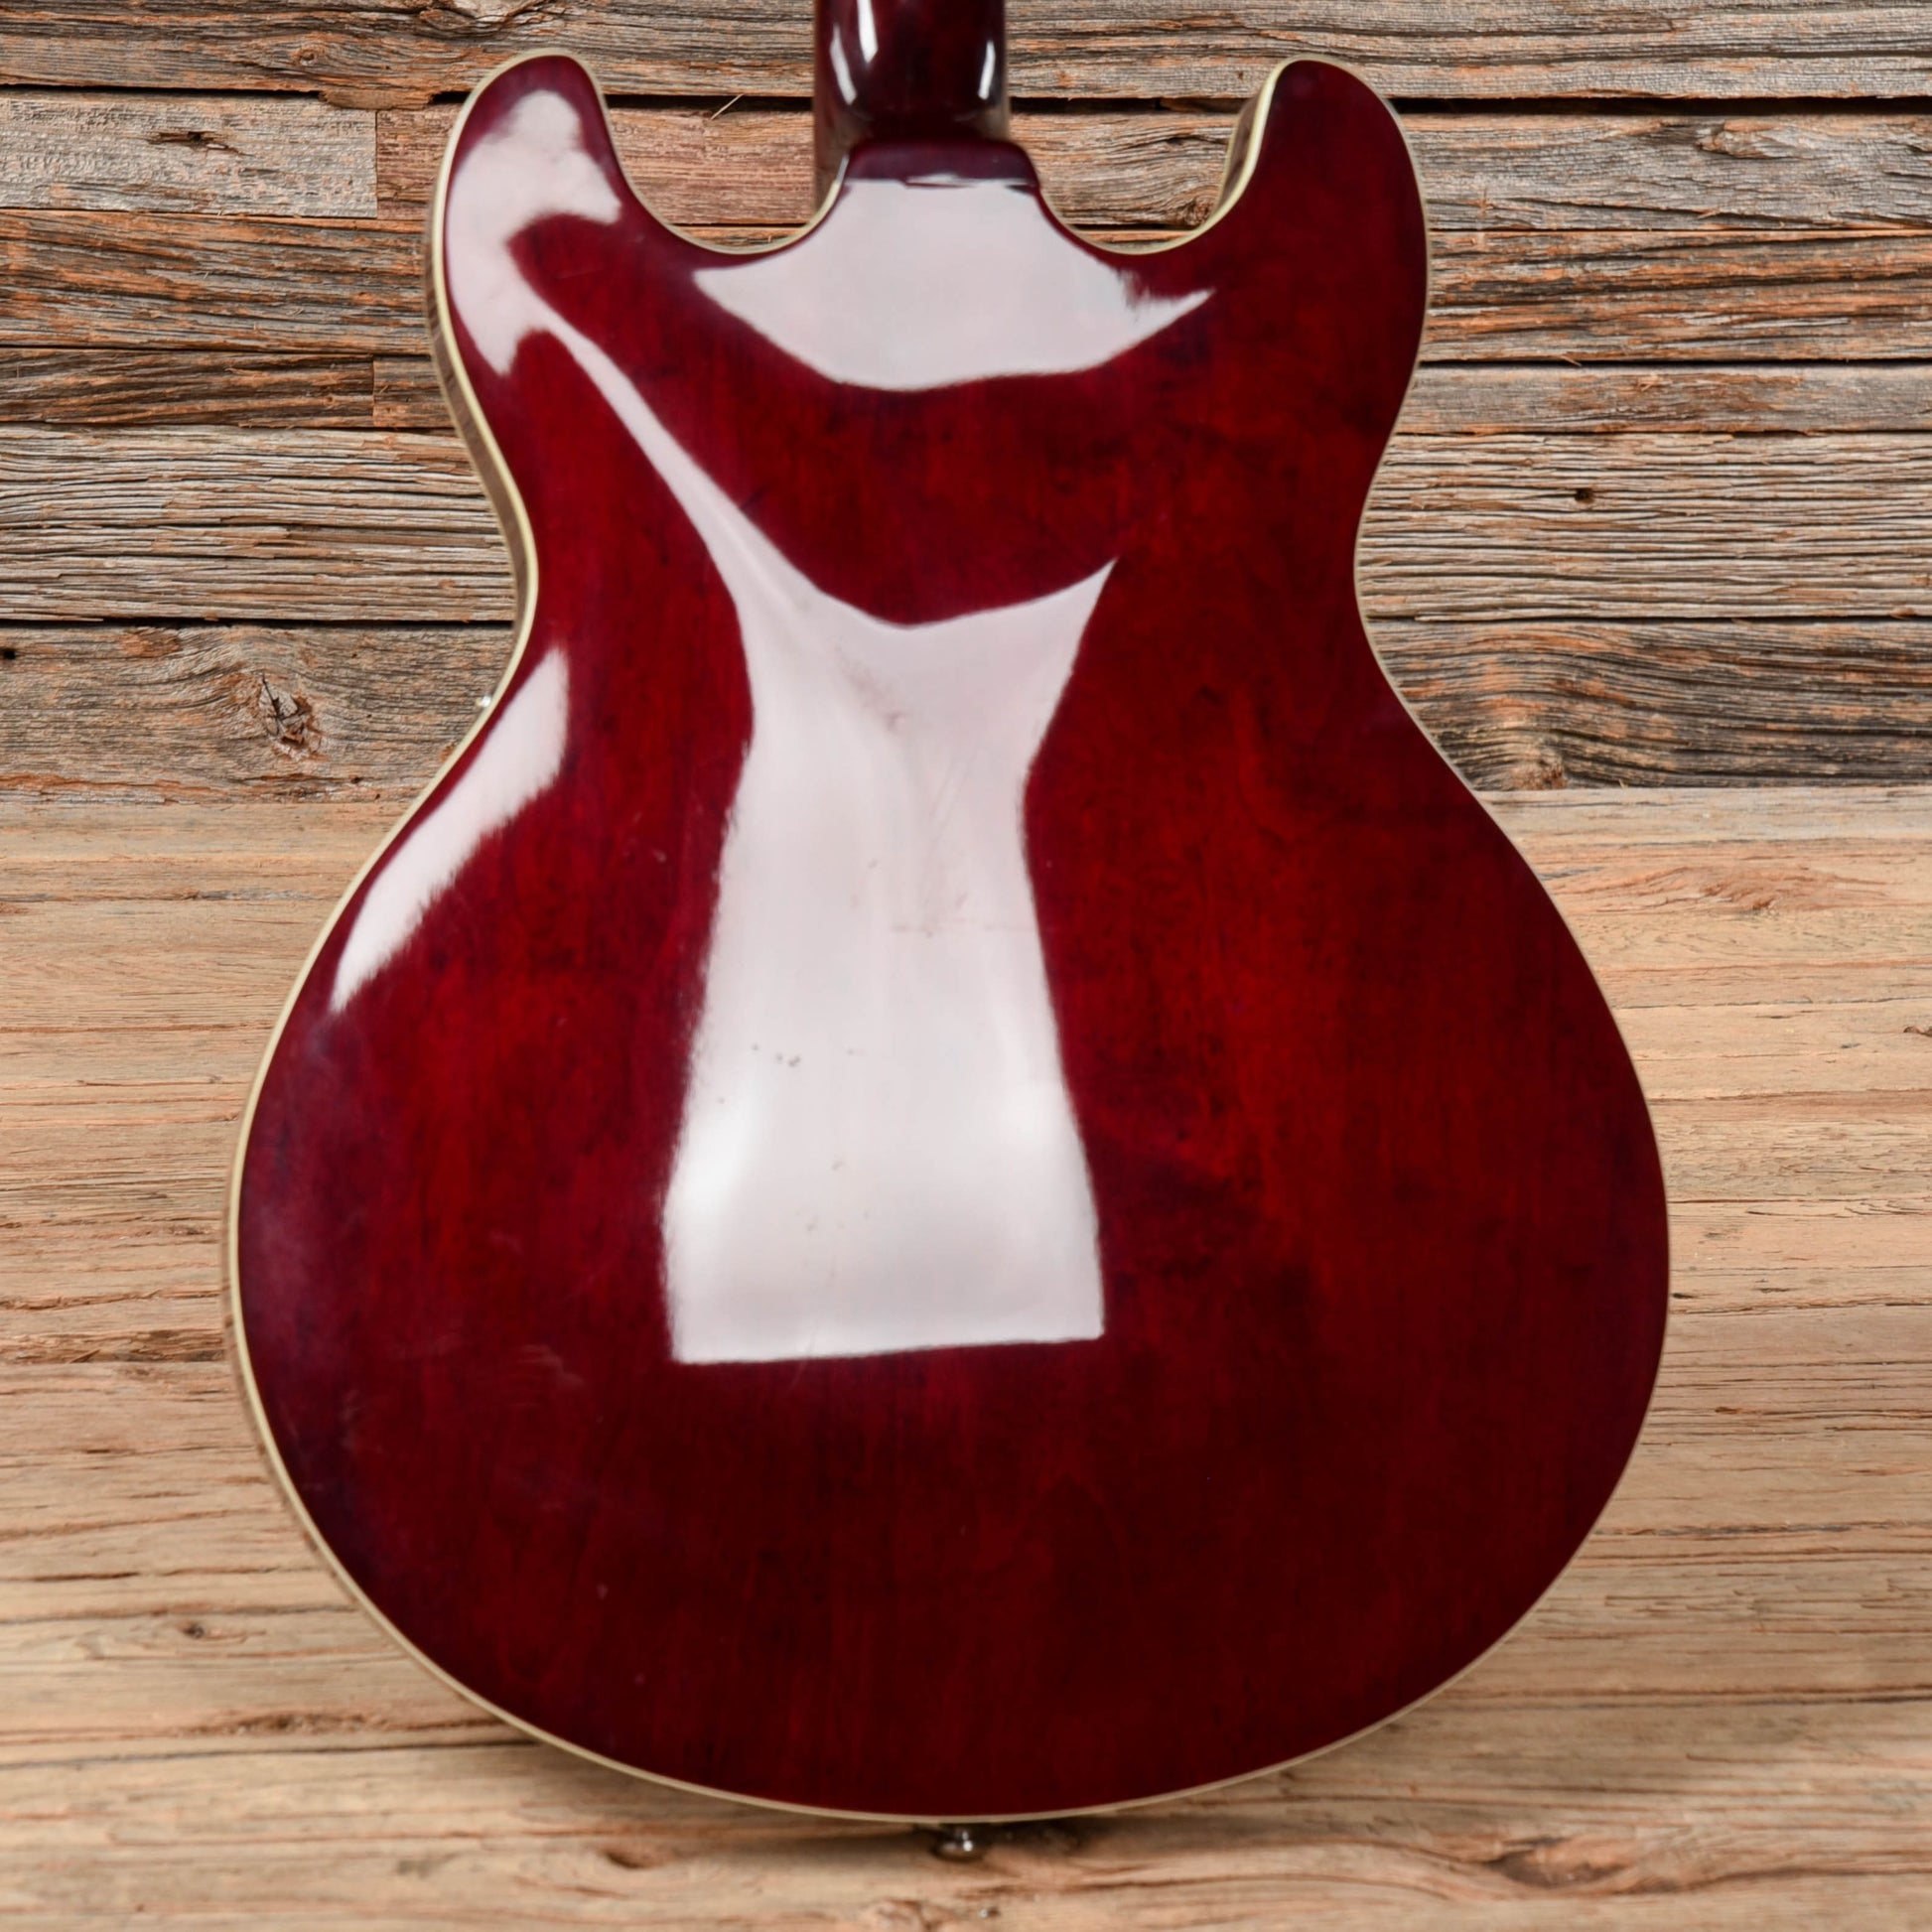 Aria Pro II TA65 Wine Red Electric Guitars / Semi-Hollow